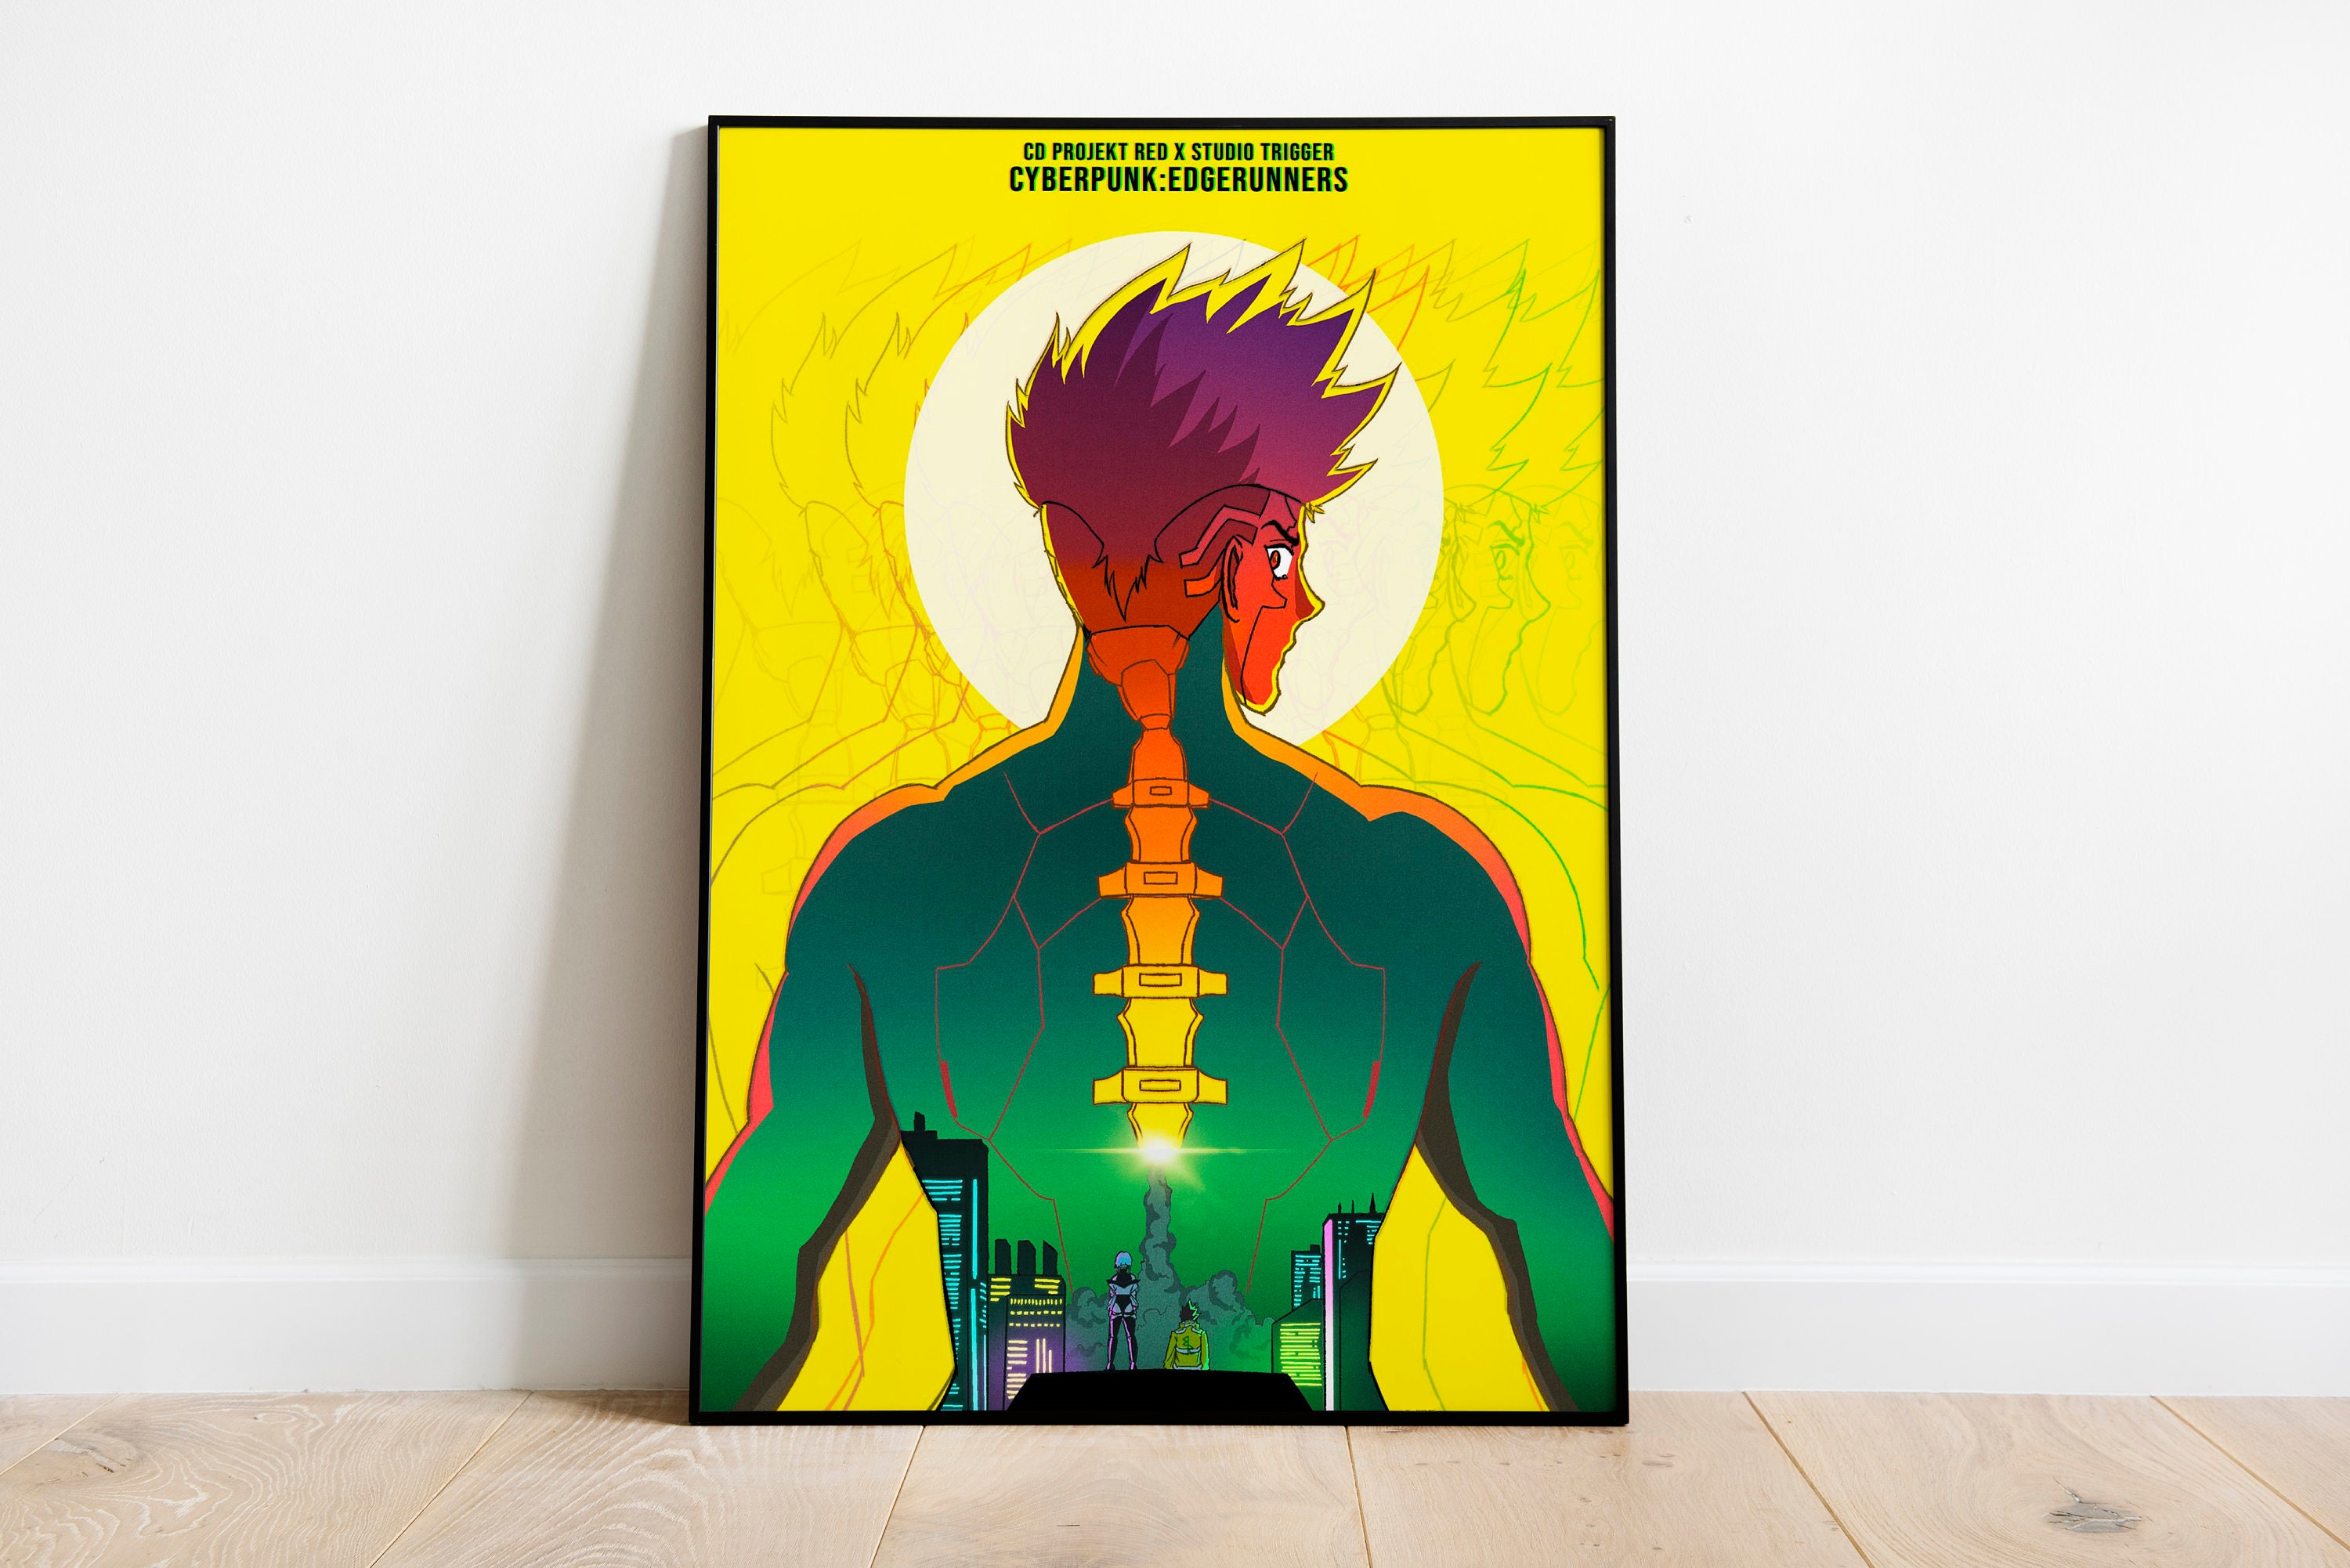 Cyberpunk: Edgerunners (#1 of 6): Mega Sized Movie Poster Image